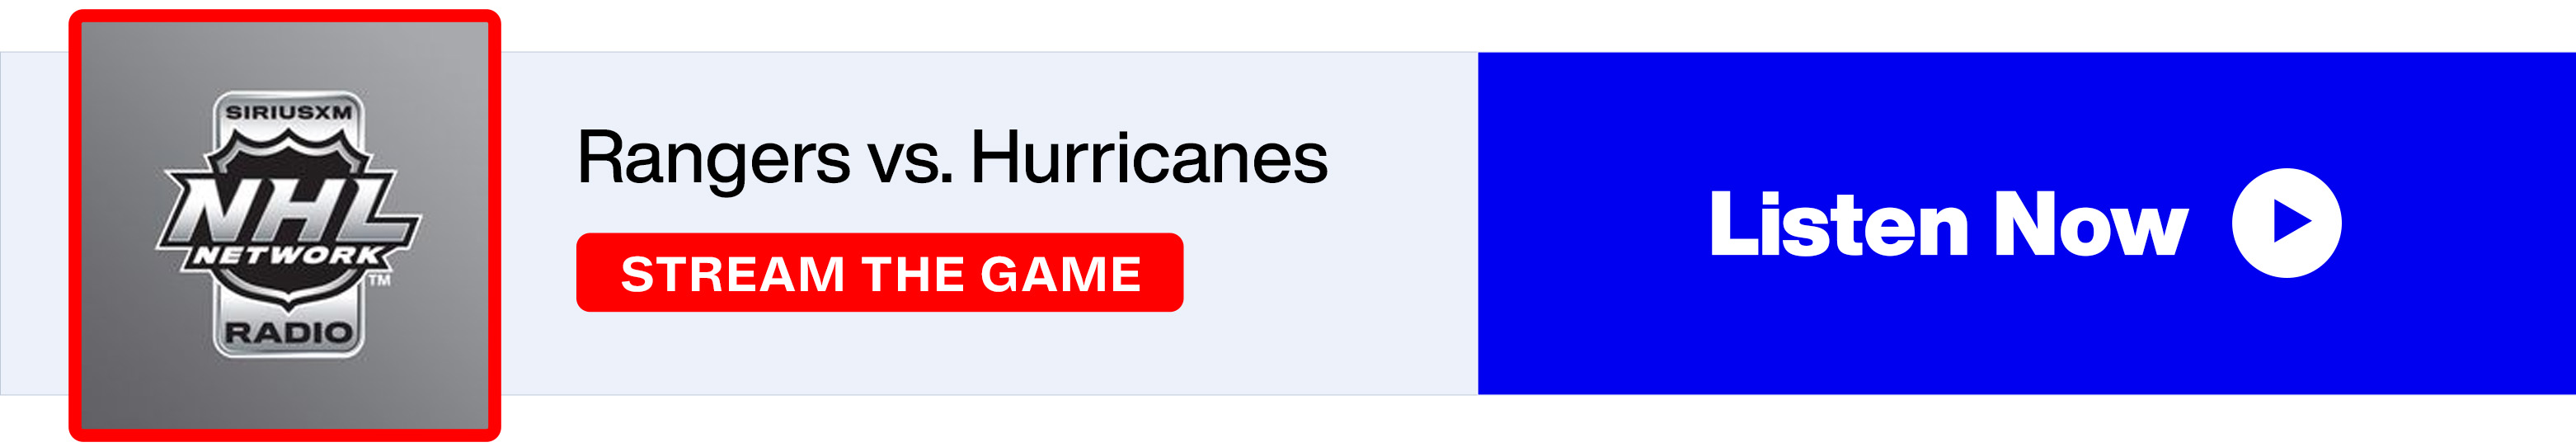 SiriusXM NHL Network Radio - Rangers vs. Hurricanes - Stream the Game - Listen Now banner